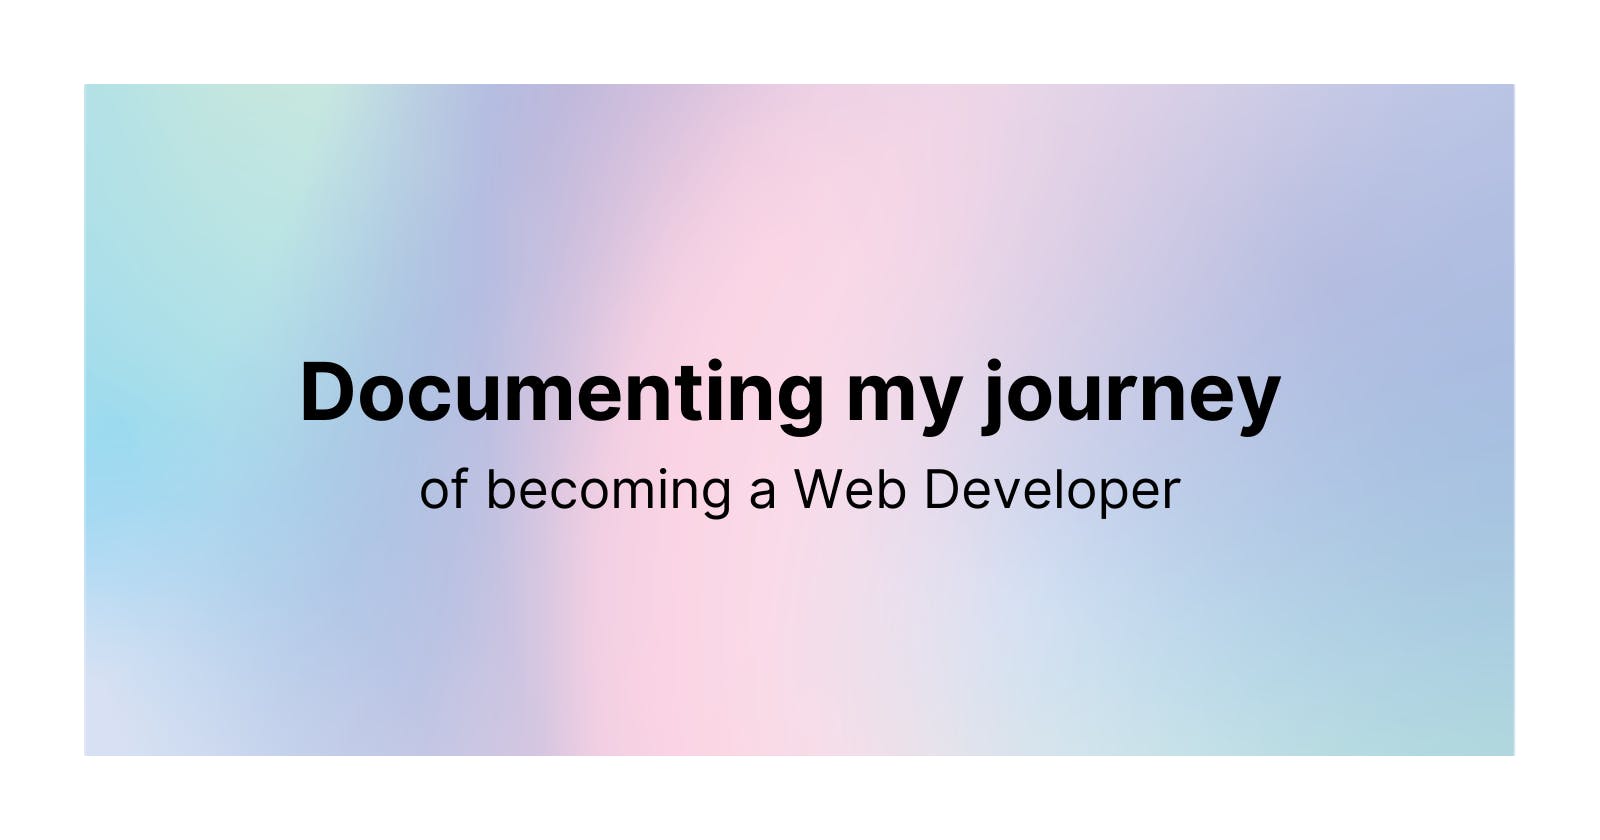 Day 3 of My Web Development Journey.